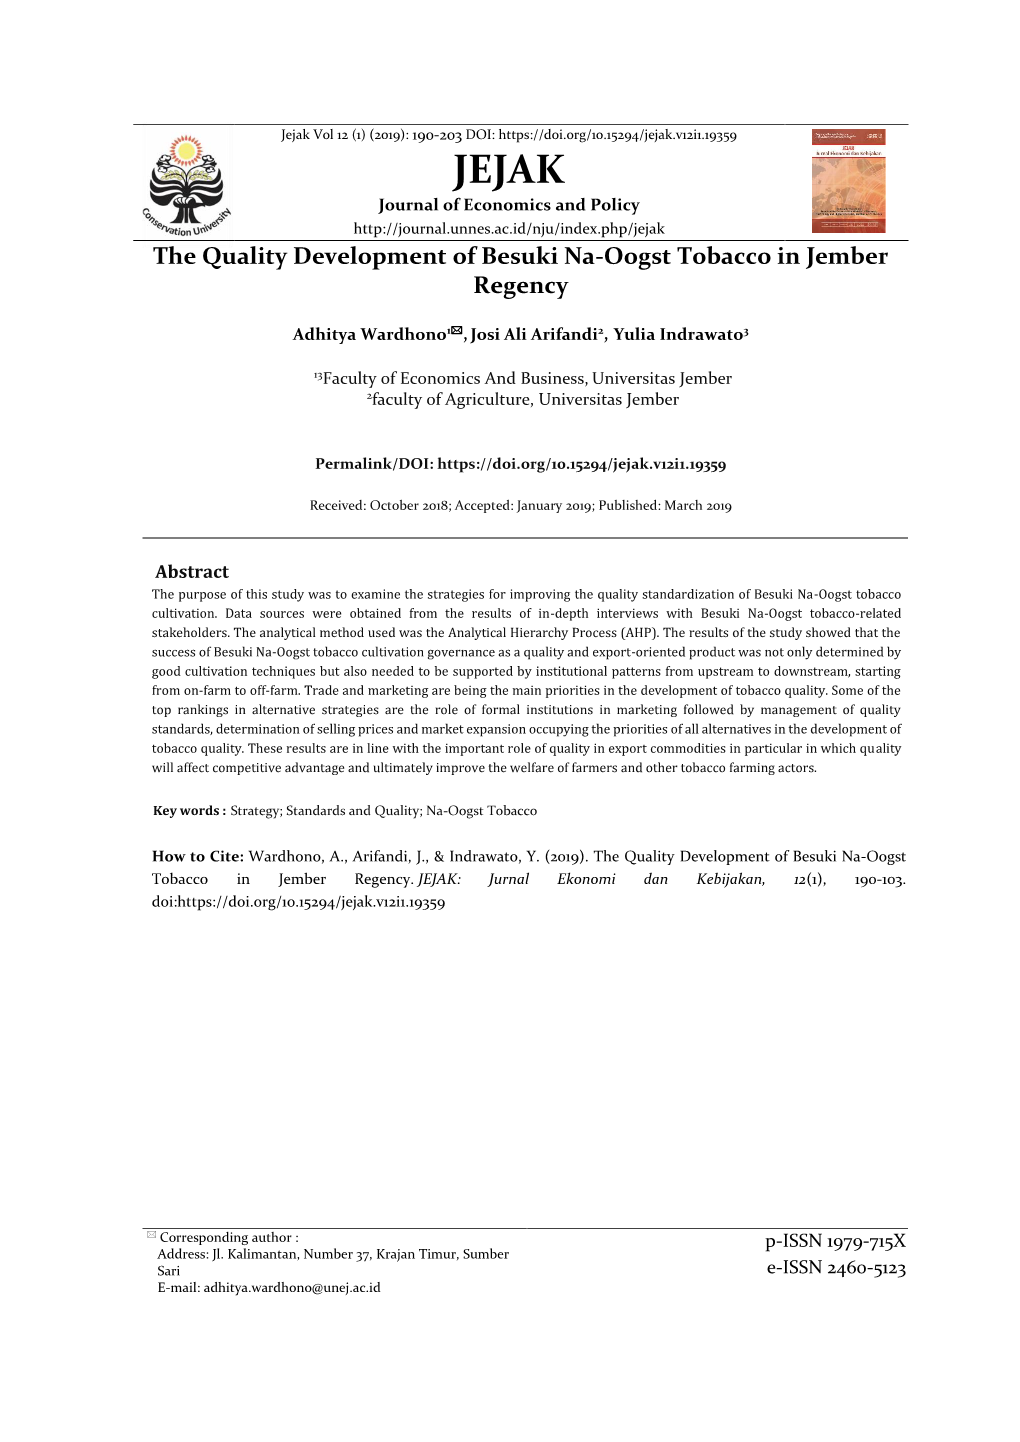 The Quality Development of Besuki Na-Oogst Tobacco in Jember Regency